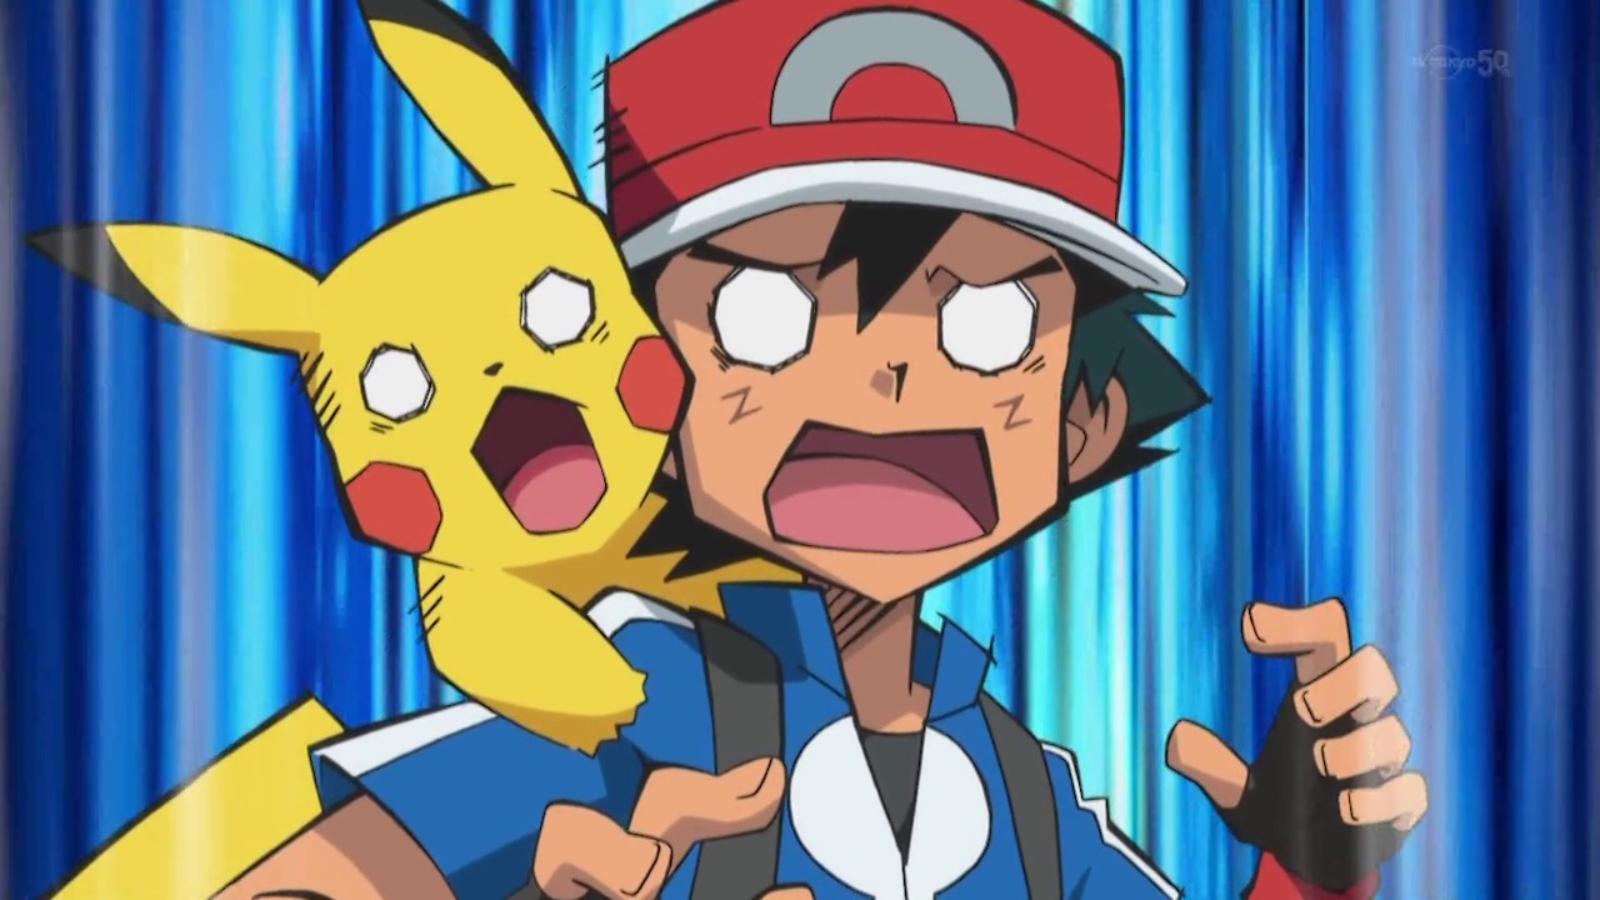 Pokemon Go player shocked to find forgotten perfect rare Pokemon